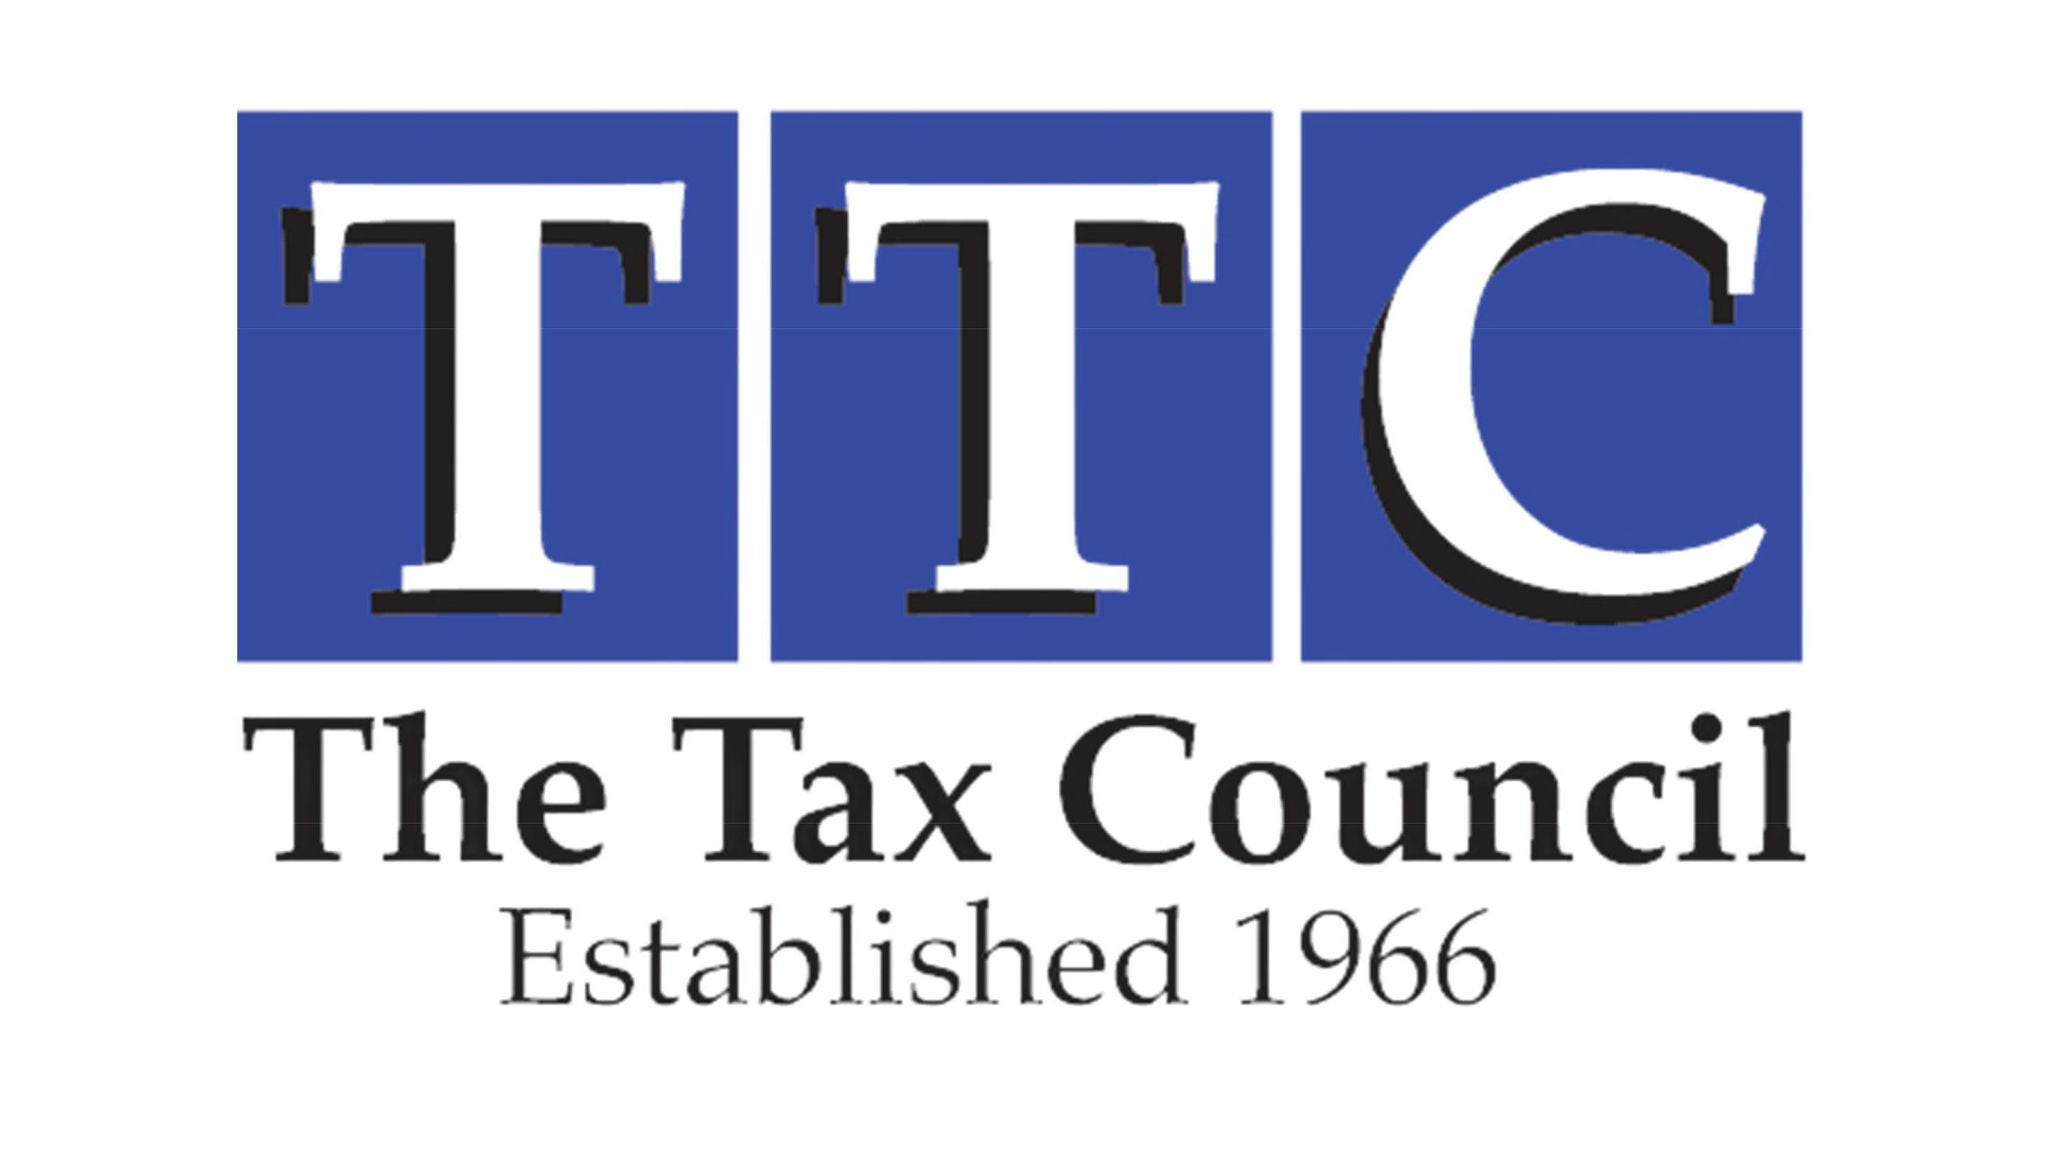 The Tax Council logo